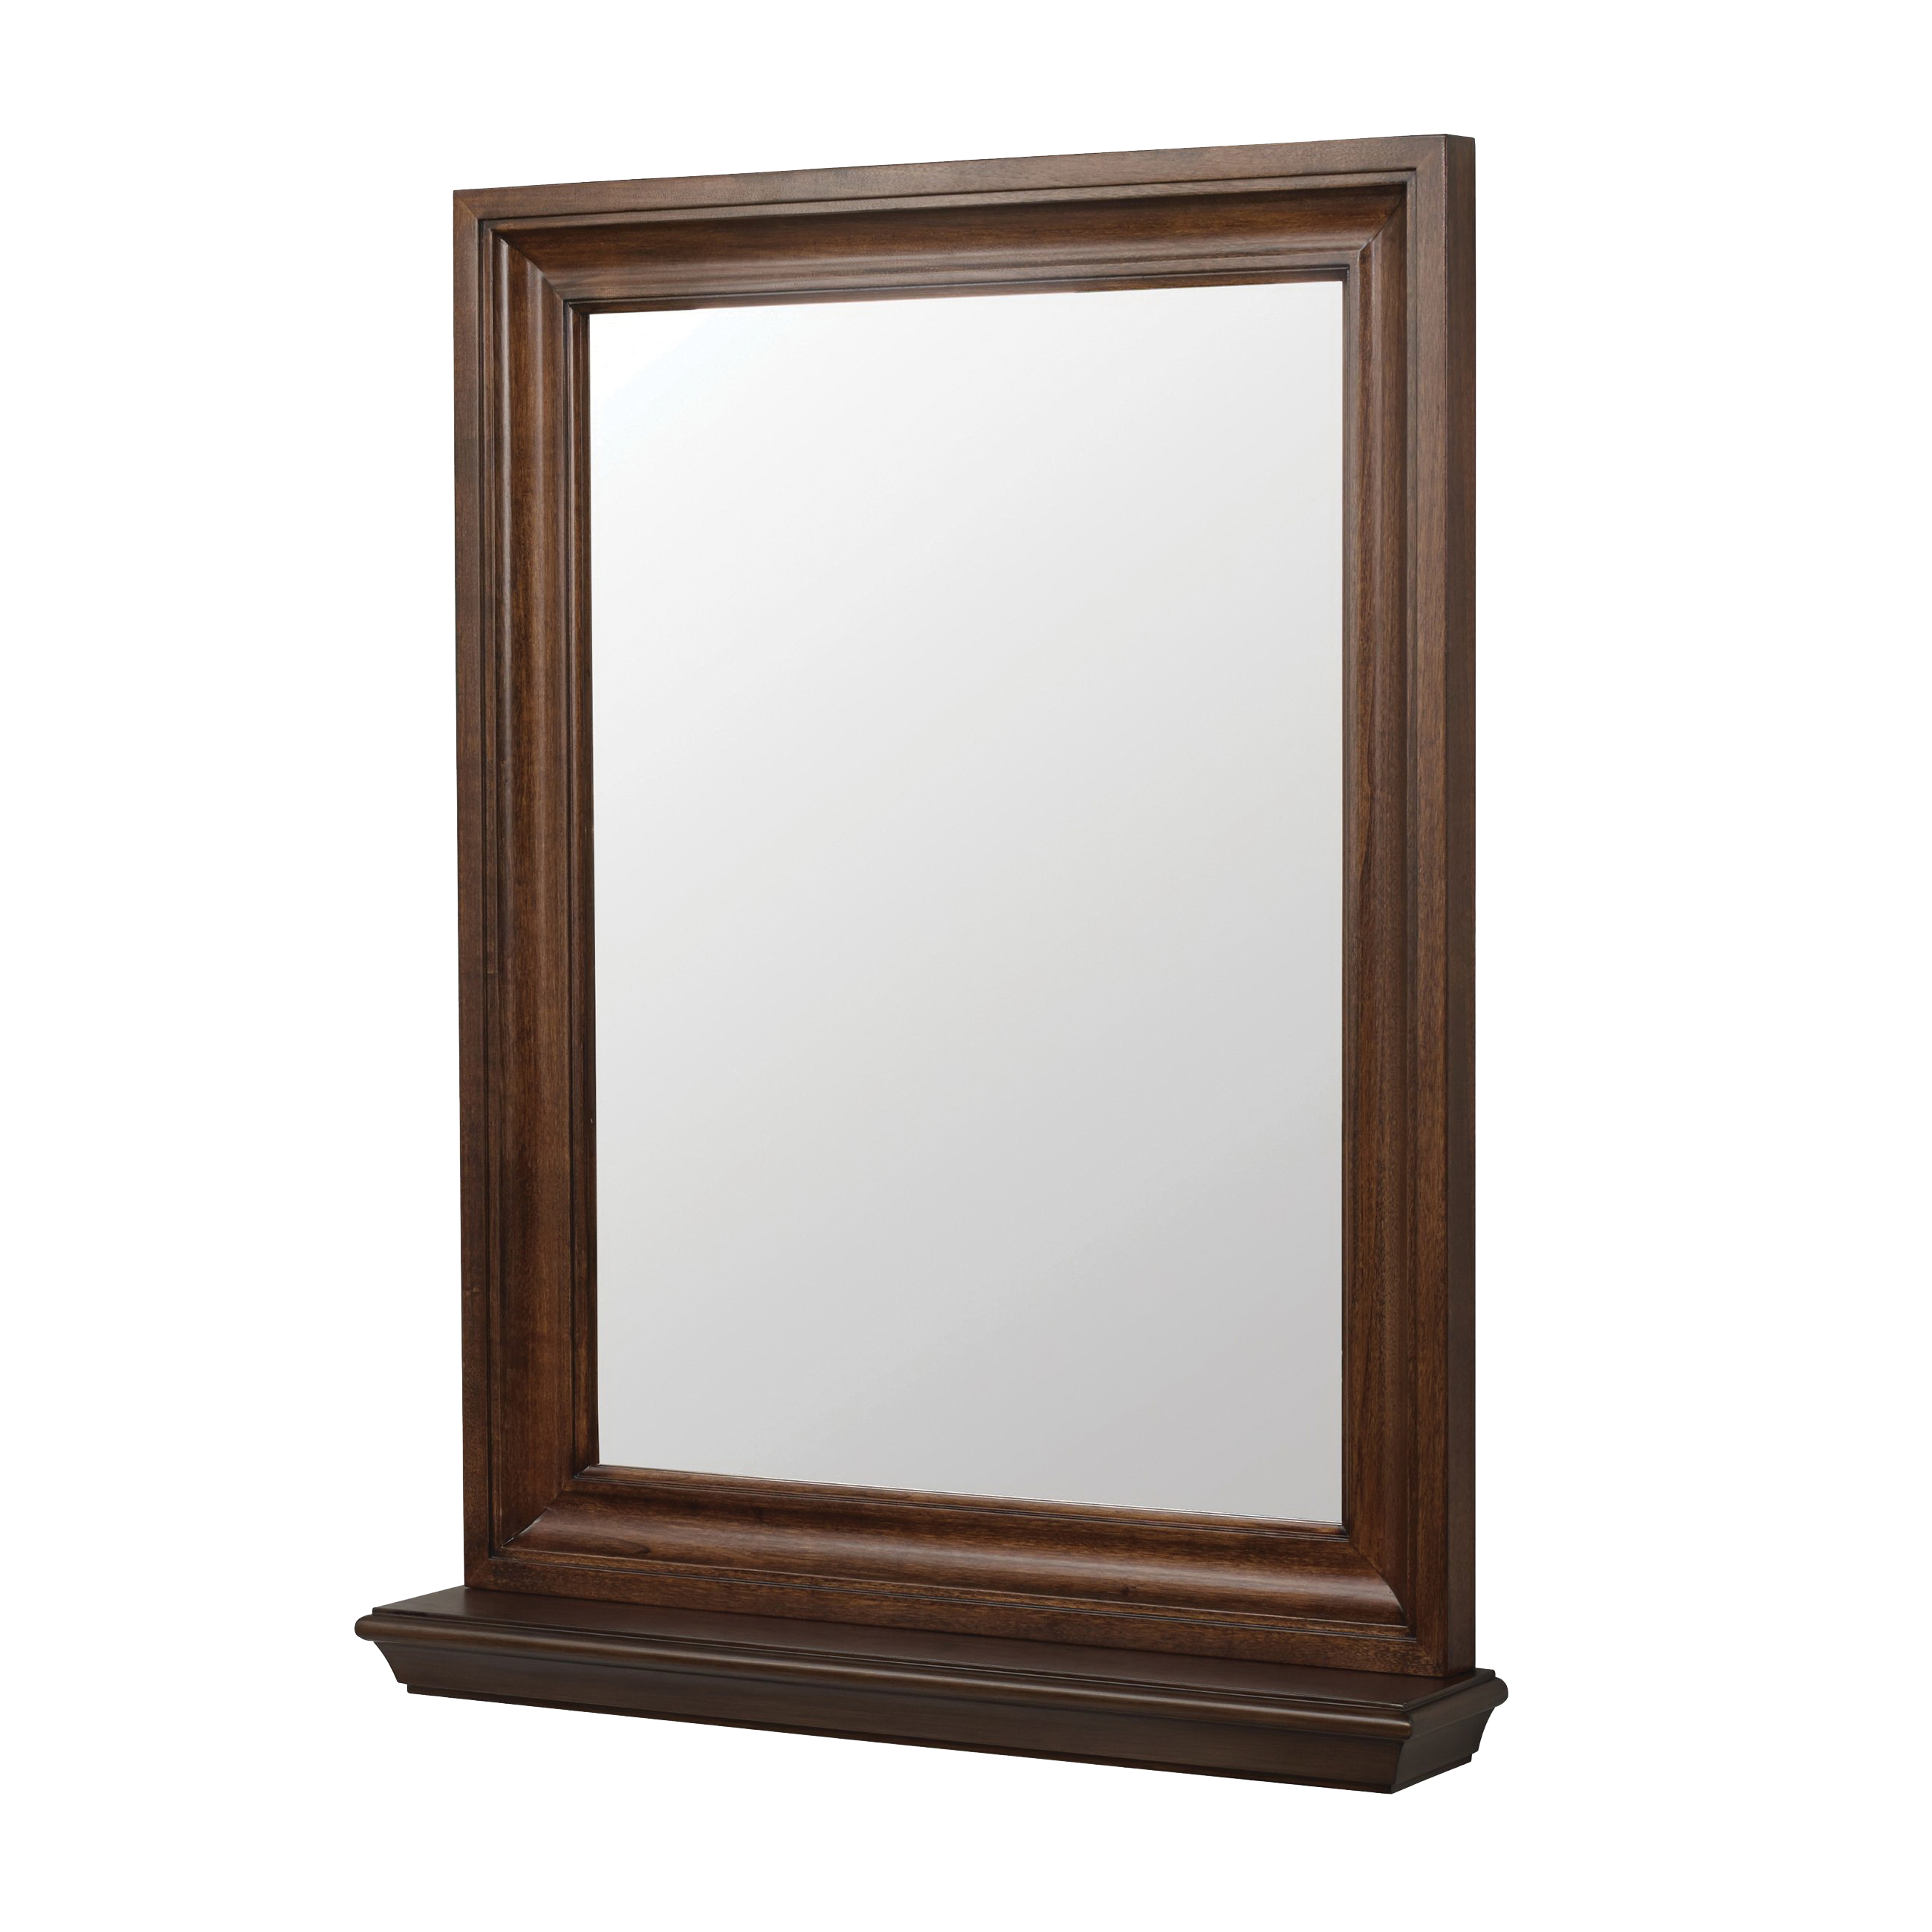 Cherie Series CHNM2430 Framed Mirror, Rectangular, 24 in W, 30 in H, Wood Frame, Dark Walnut Frame, Wall